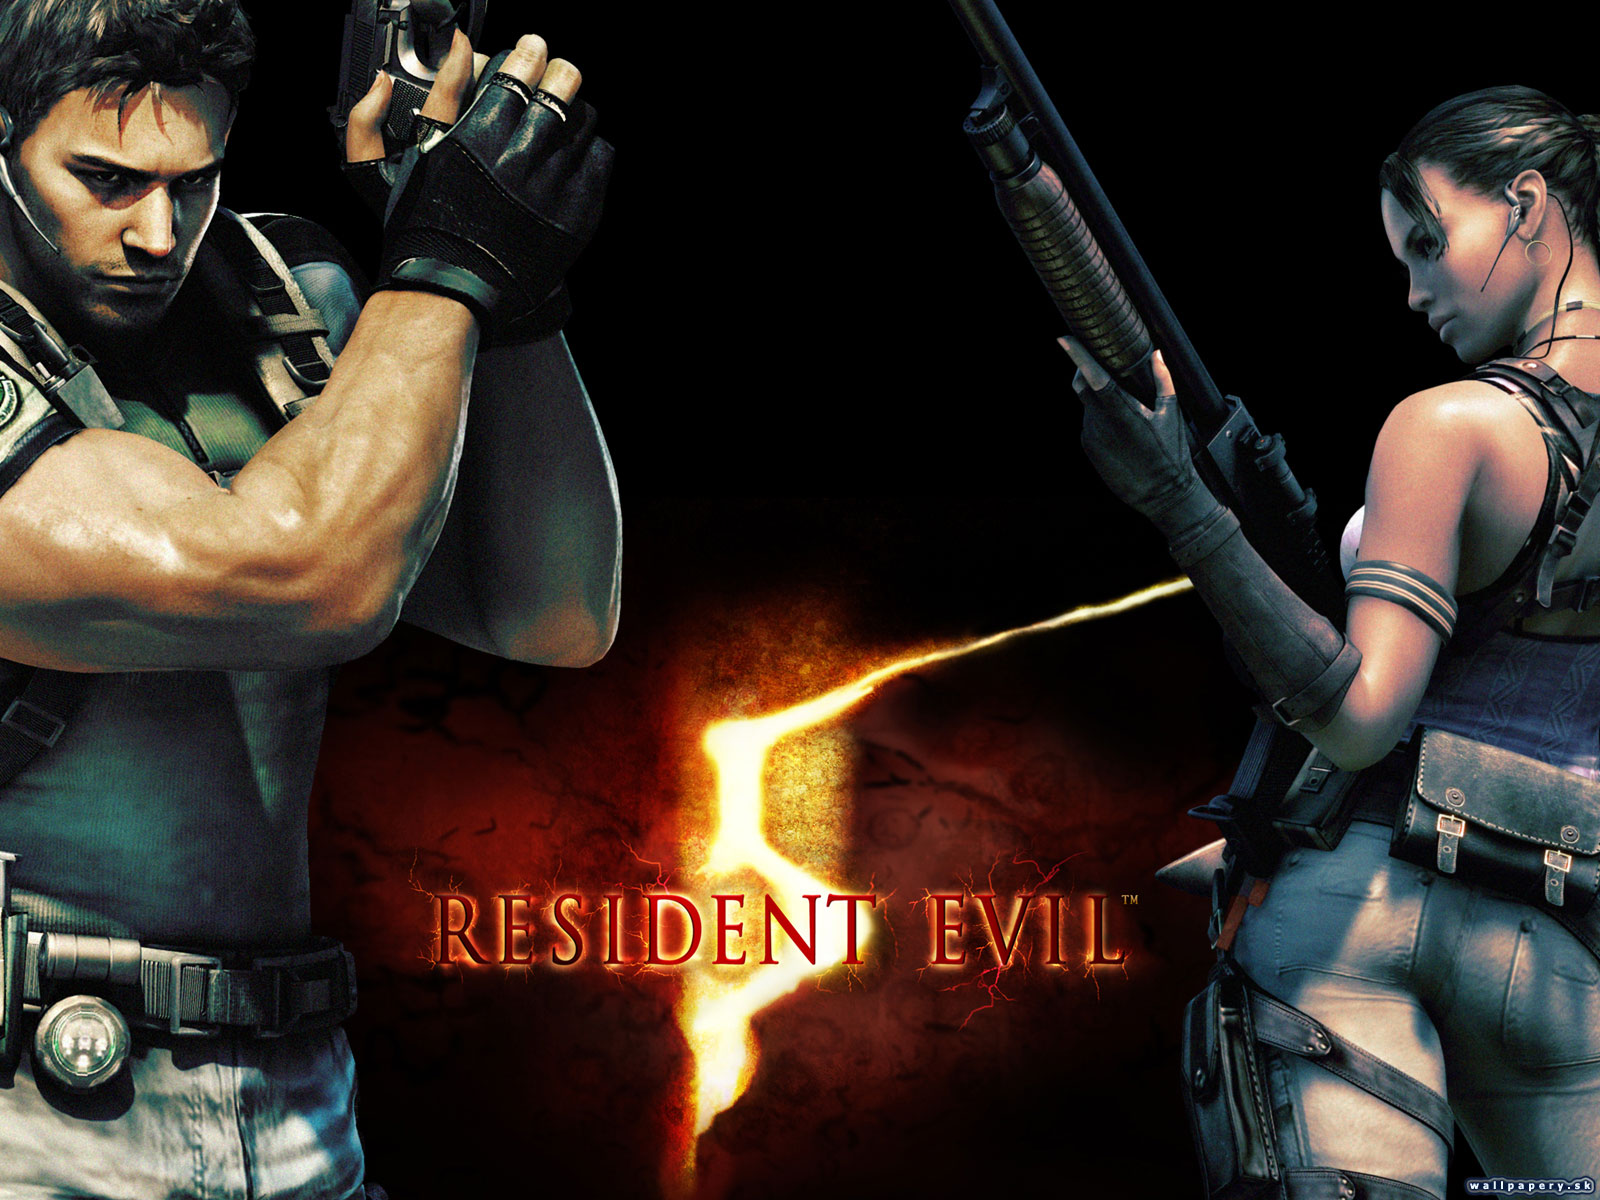 Resident evil 5 кооператив на пиратке steam фото 95